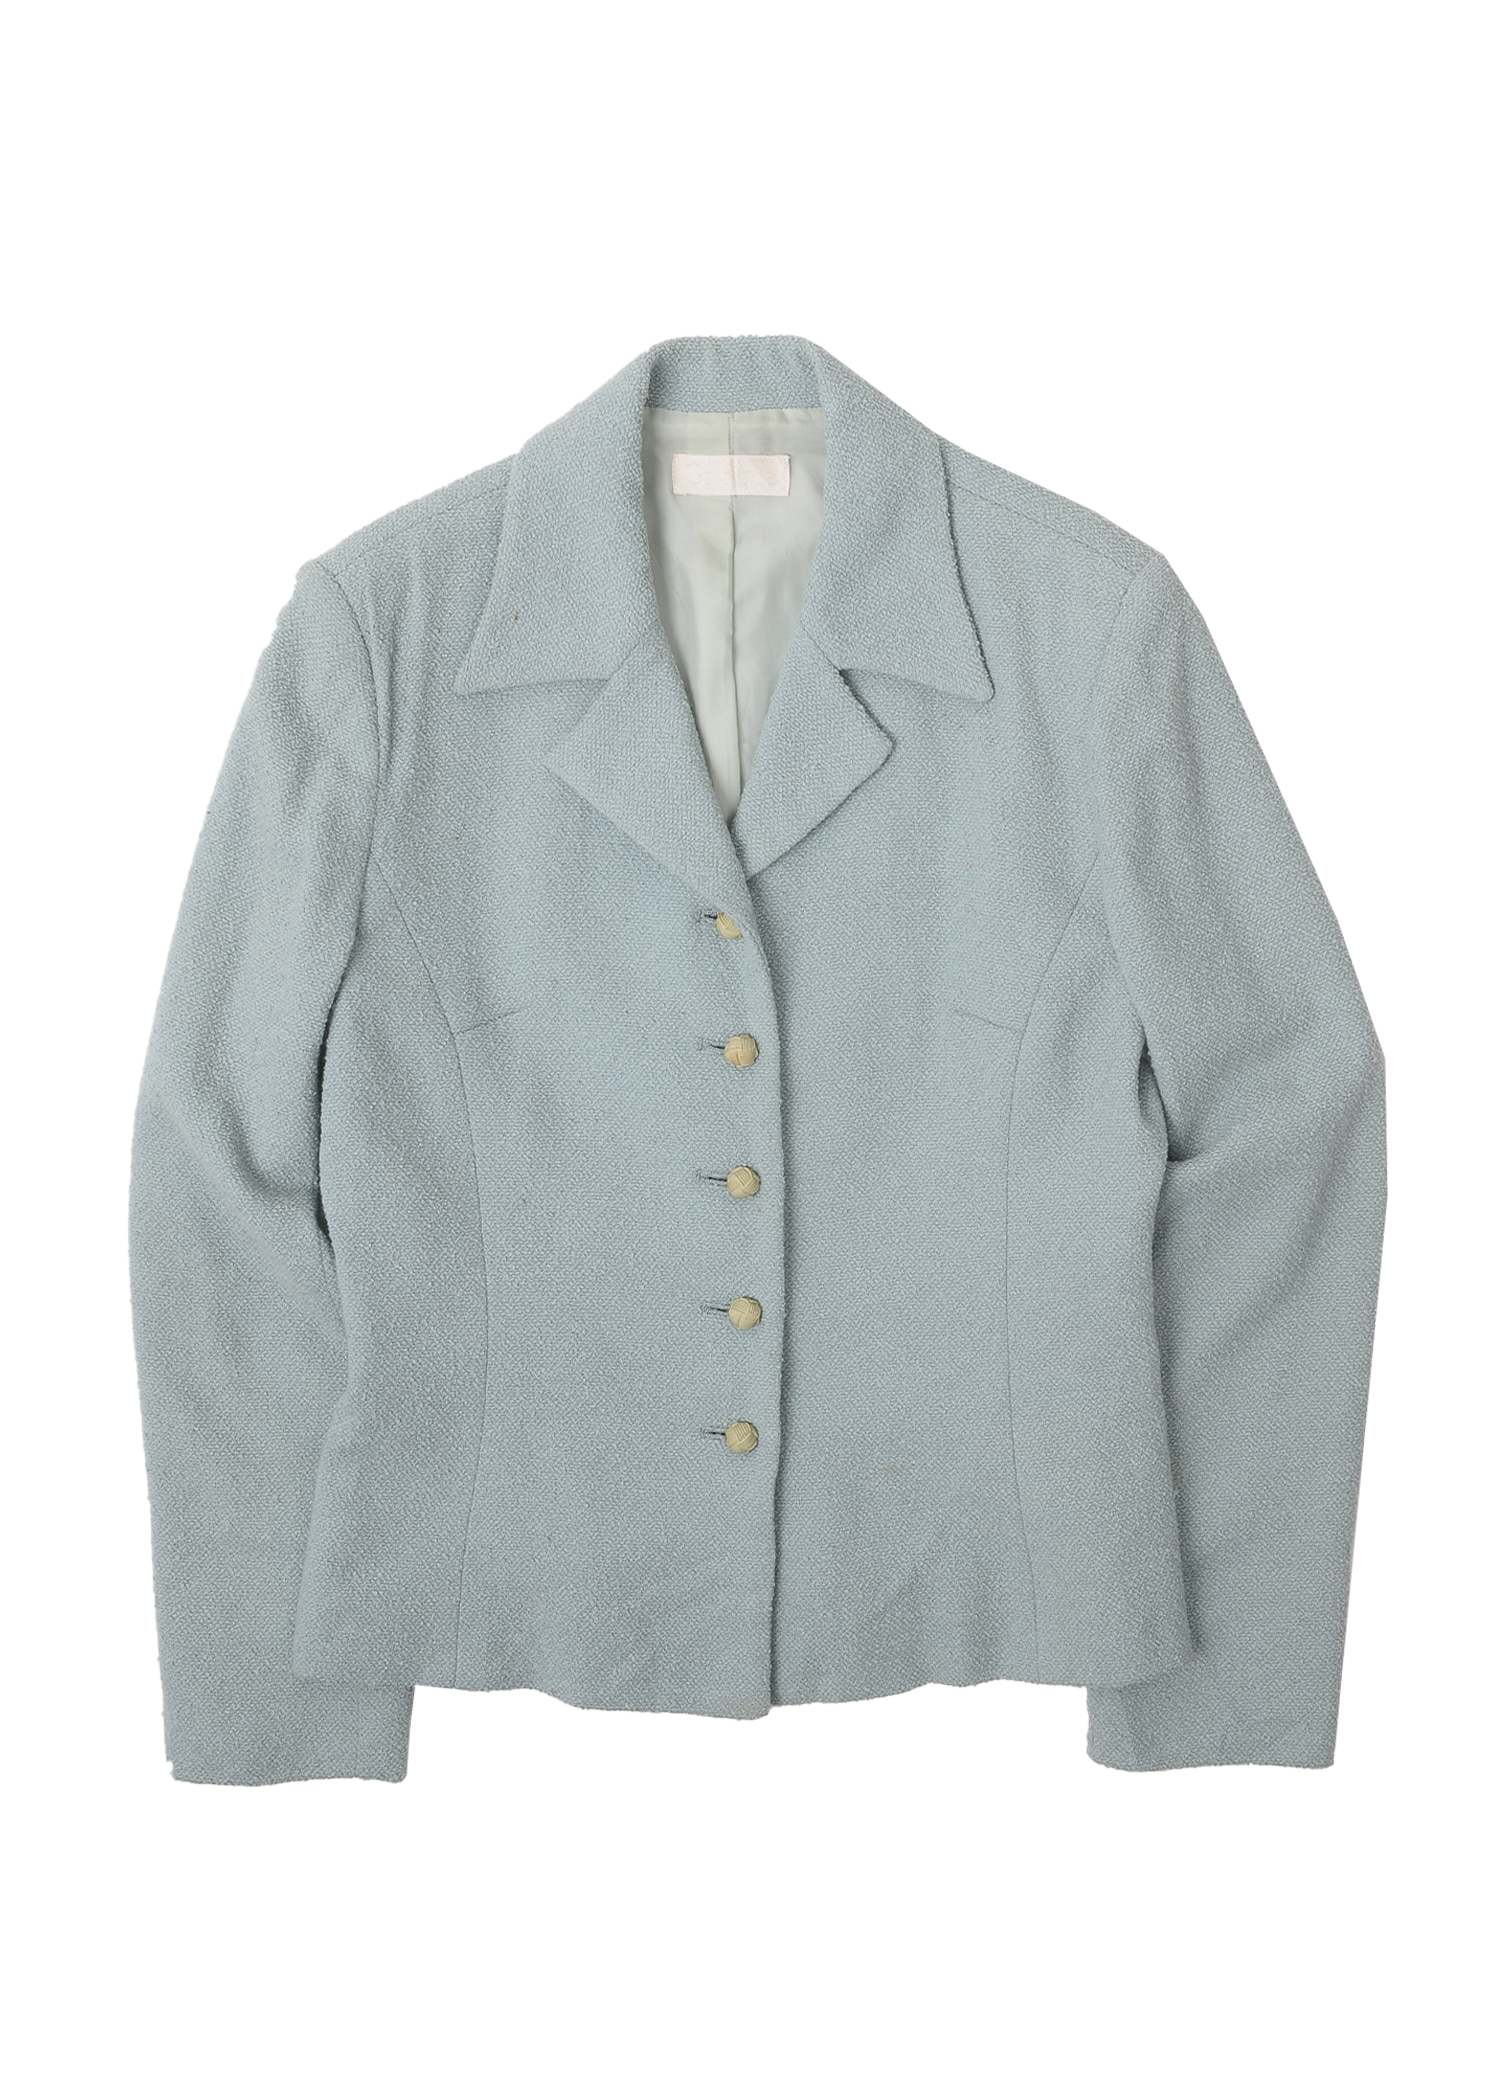 select vintage : mint jacket